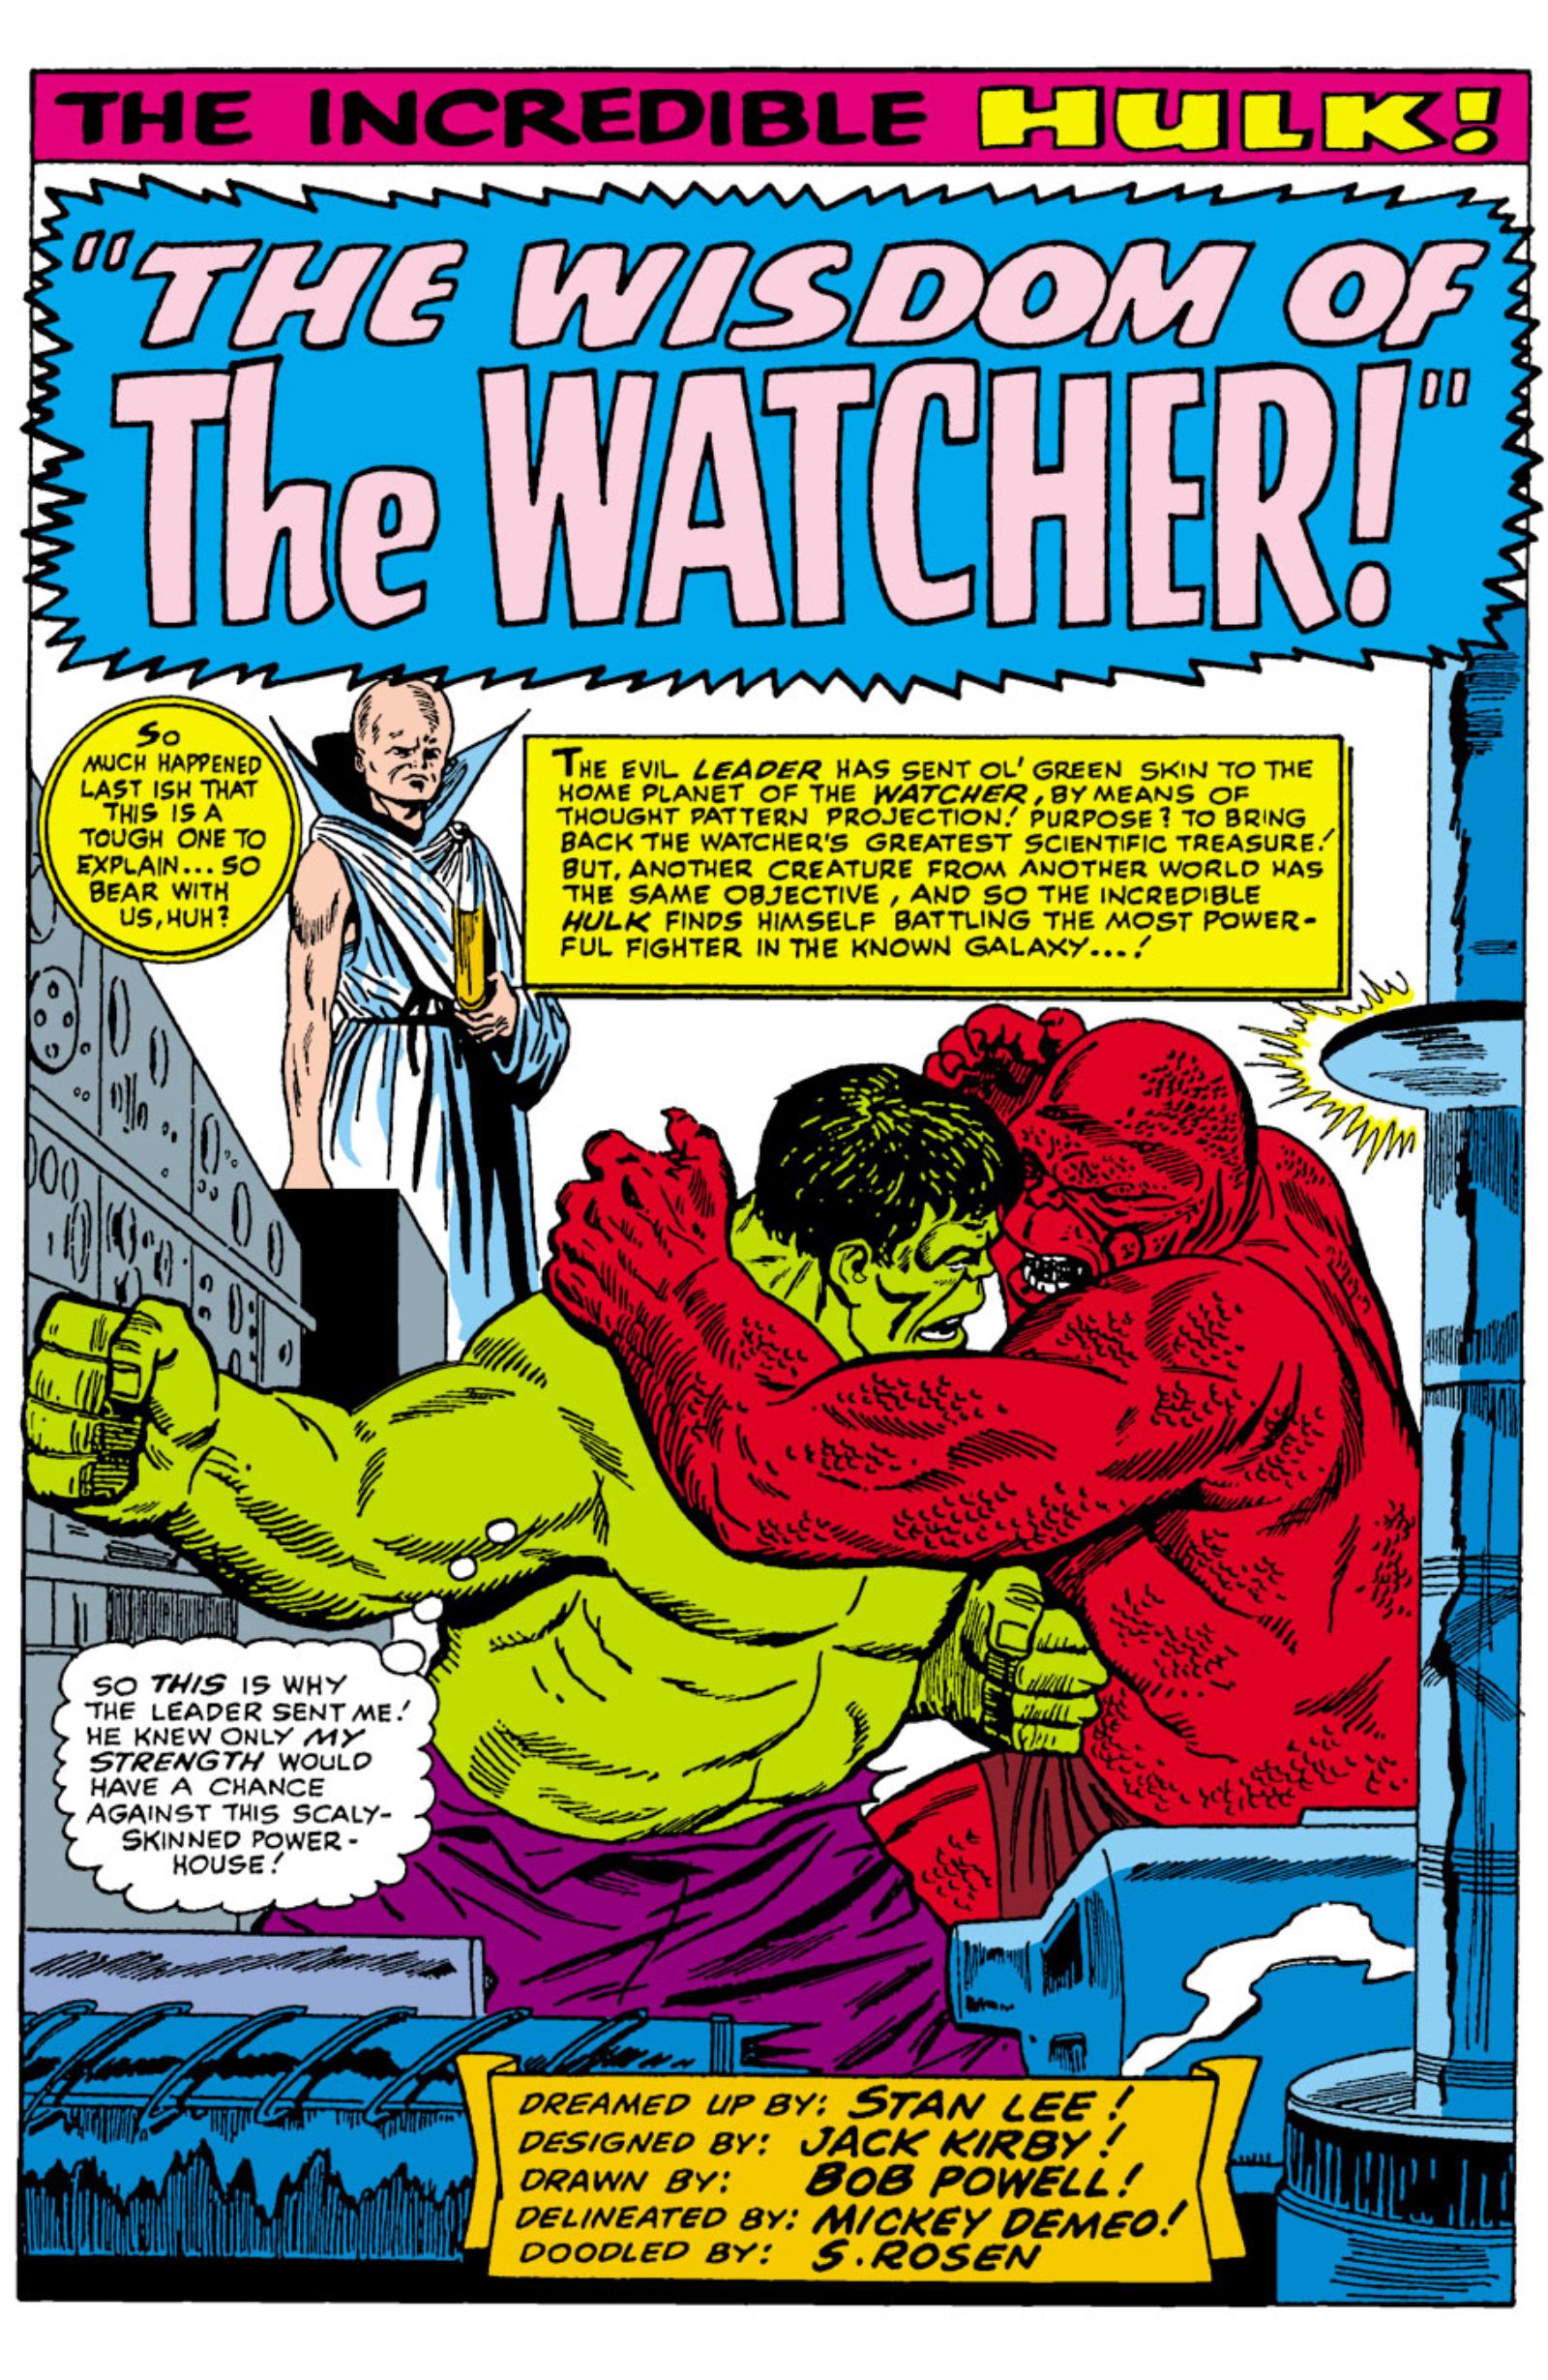 The Watcher sees Hulk fight